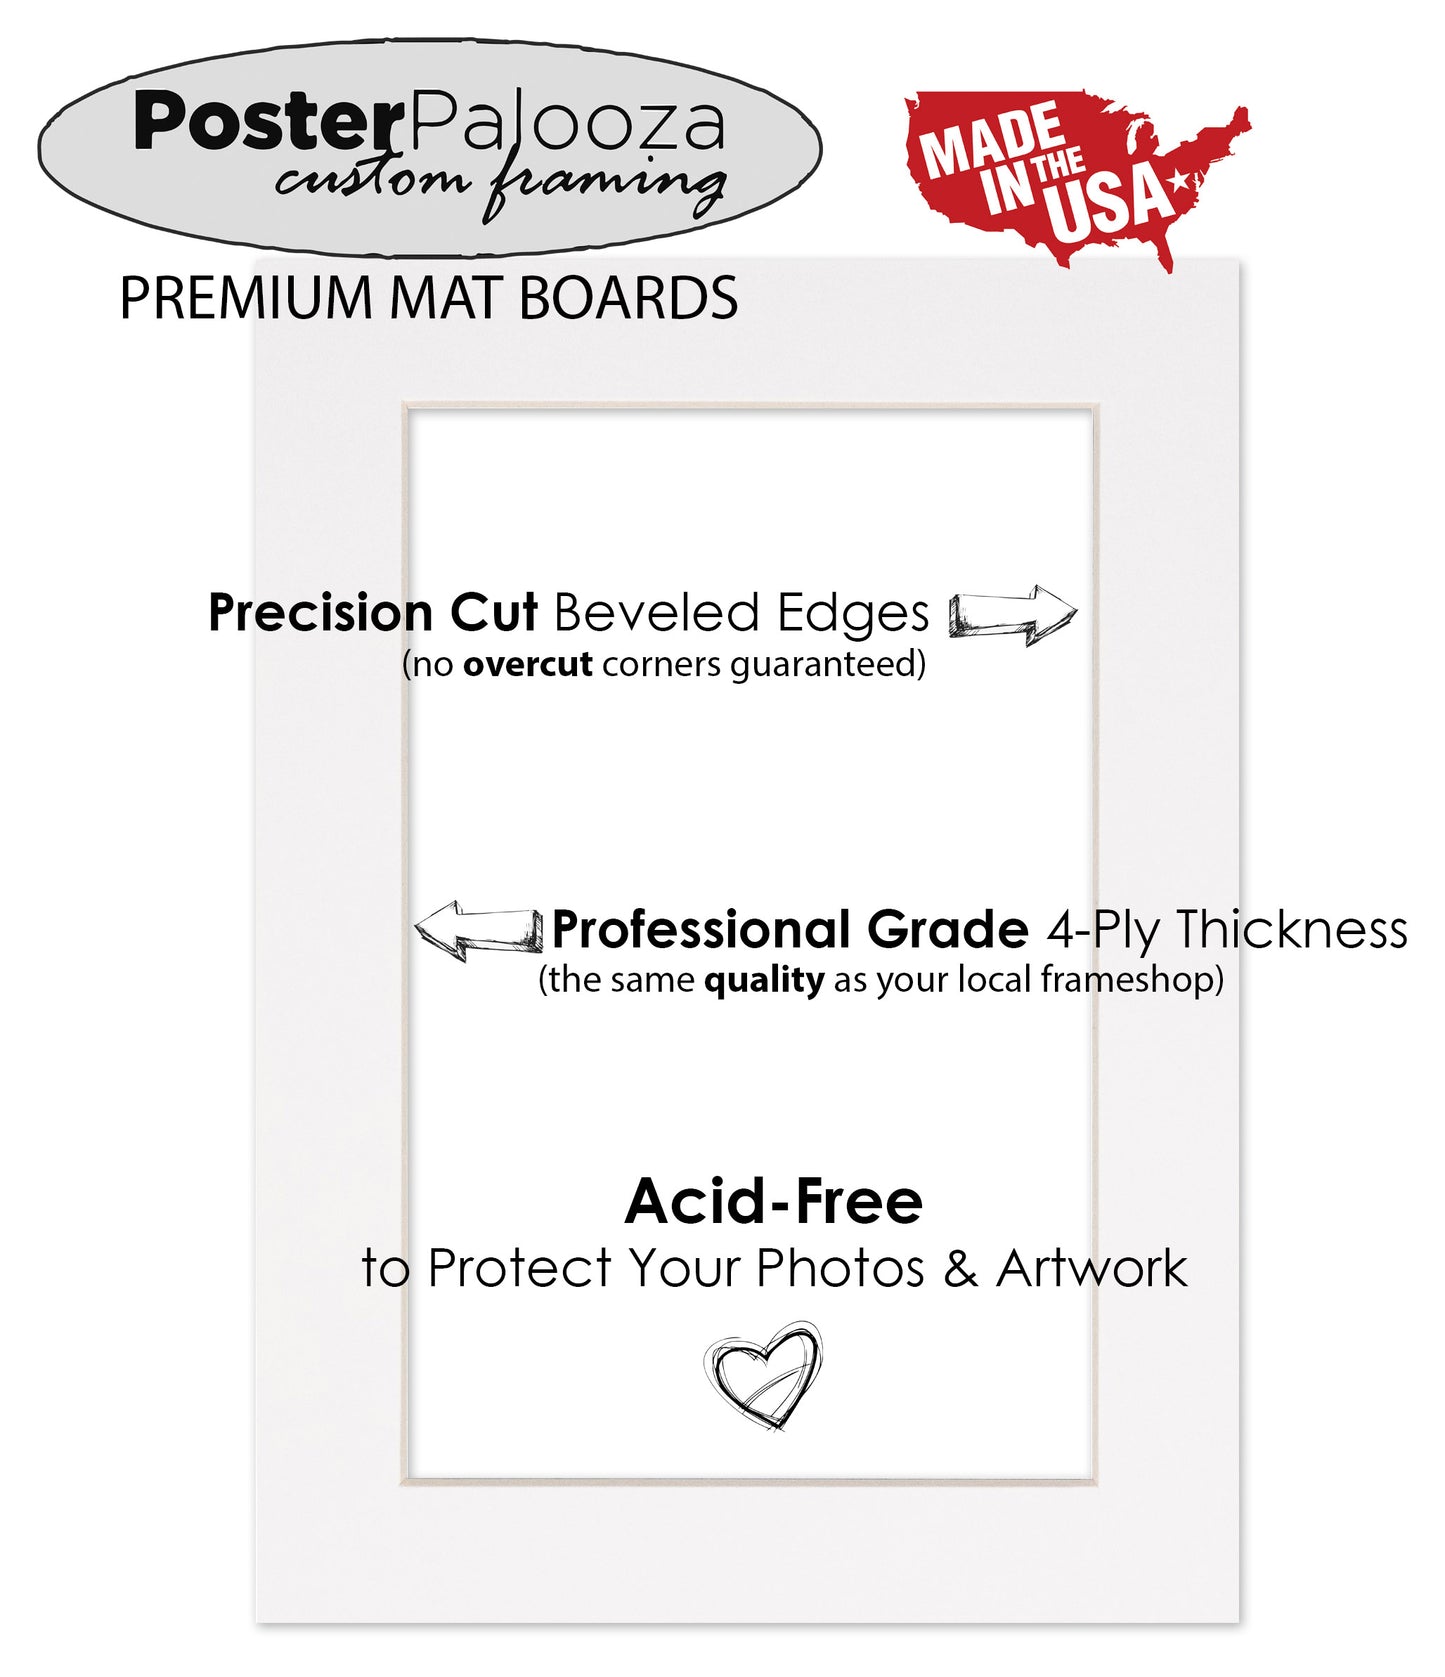 Pack of 10 Taupe Beige Precut Acid-Free Matboards